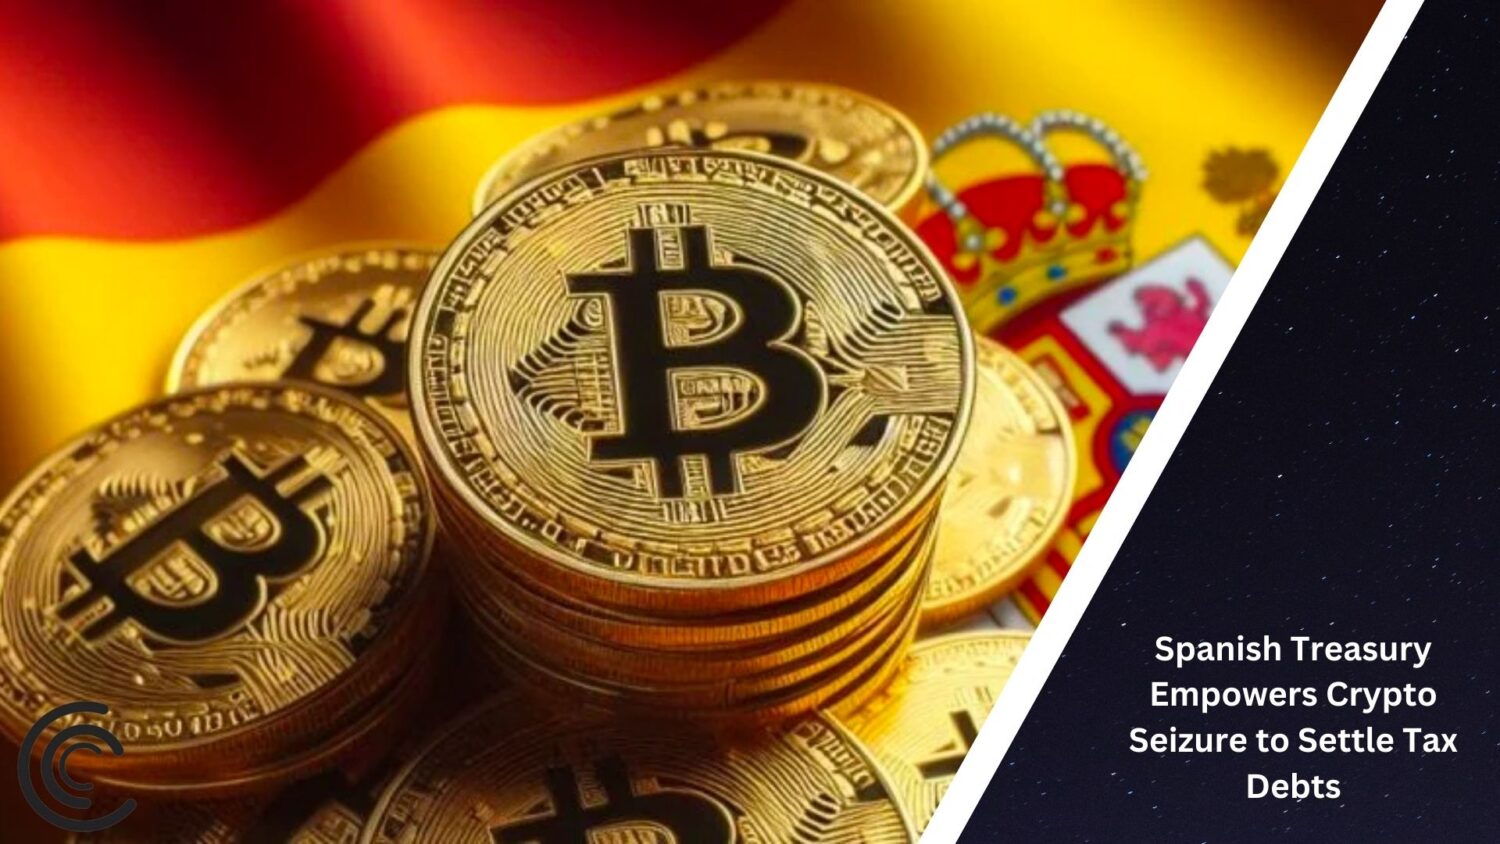 Spanish Treasury Empowers Crypto Seizure To Settle Tax Debts